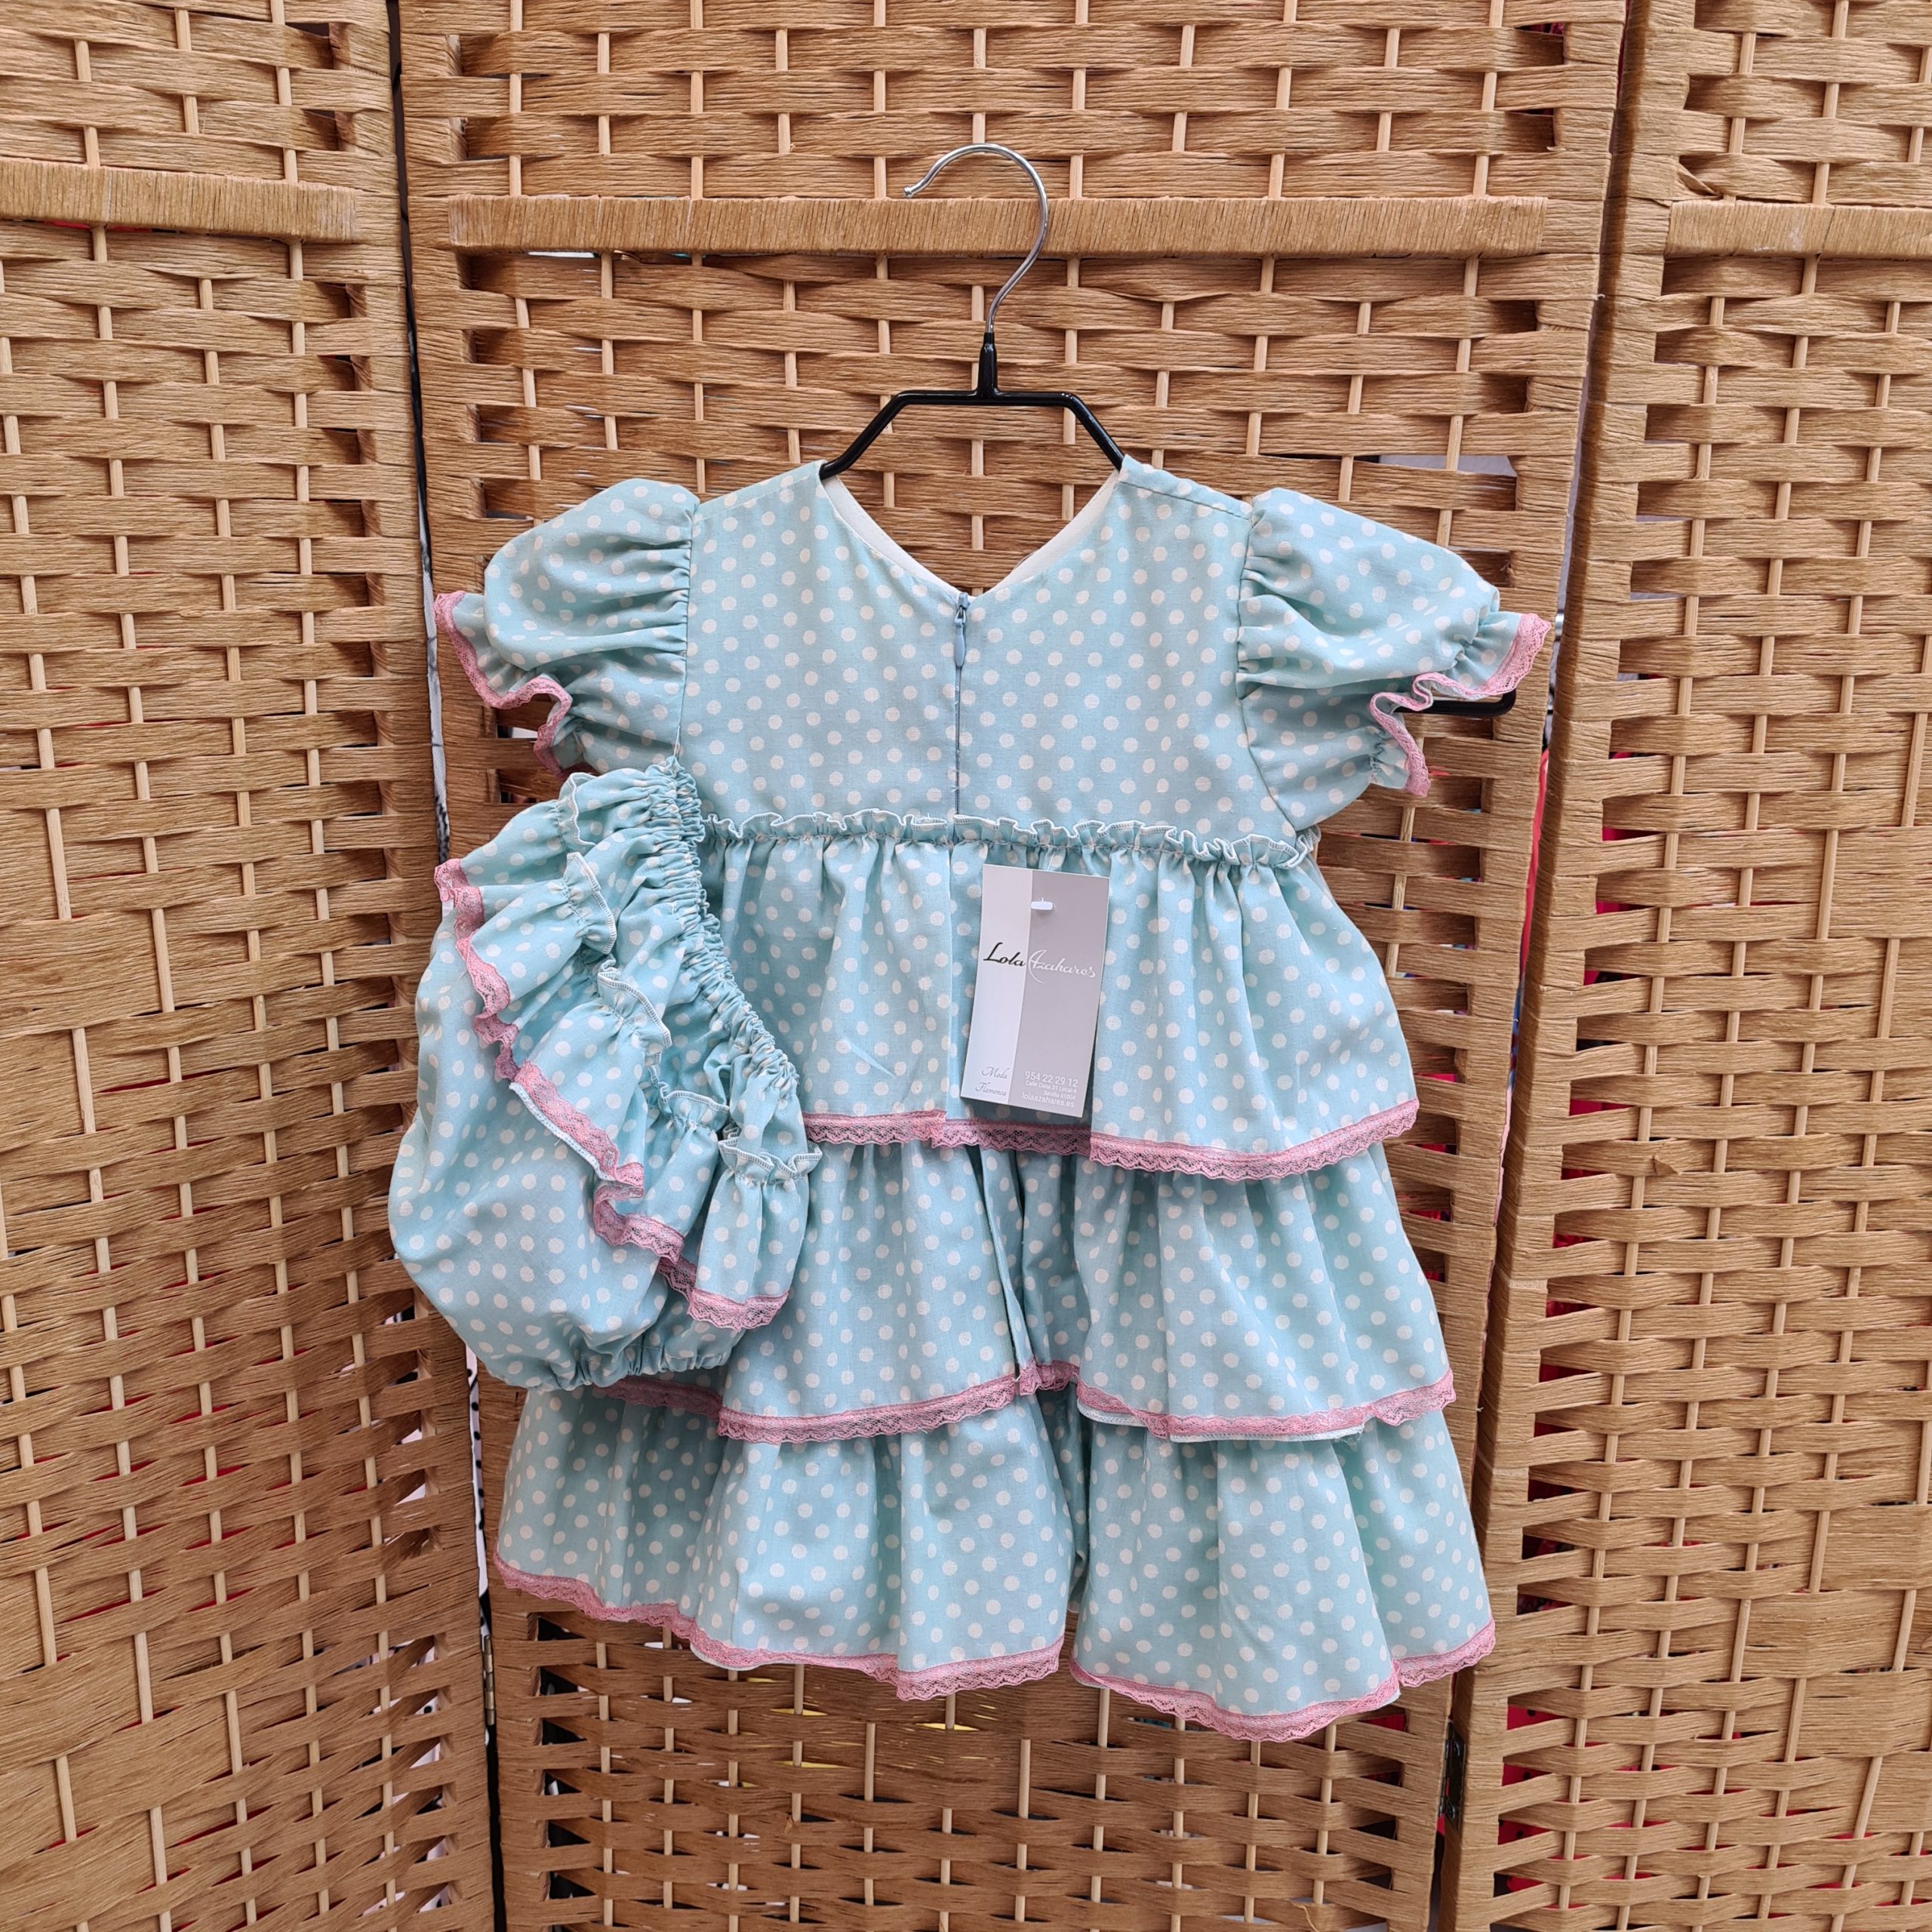 detalles de los vestidos de flamenca para bebés